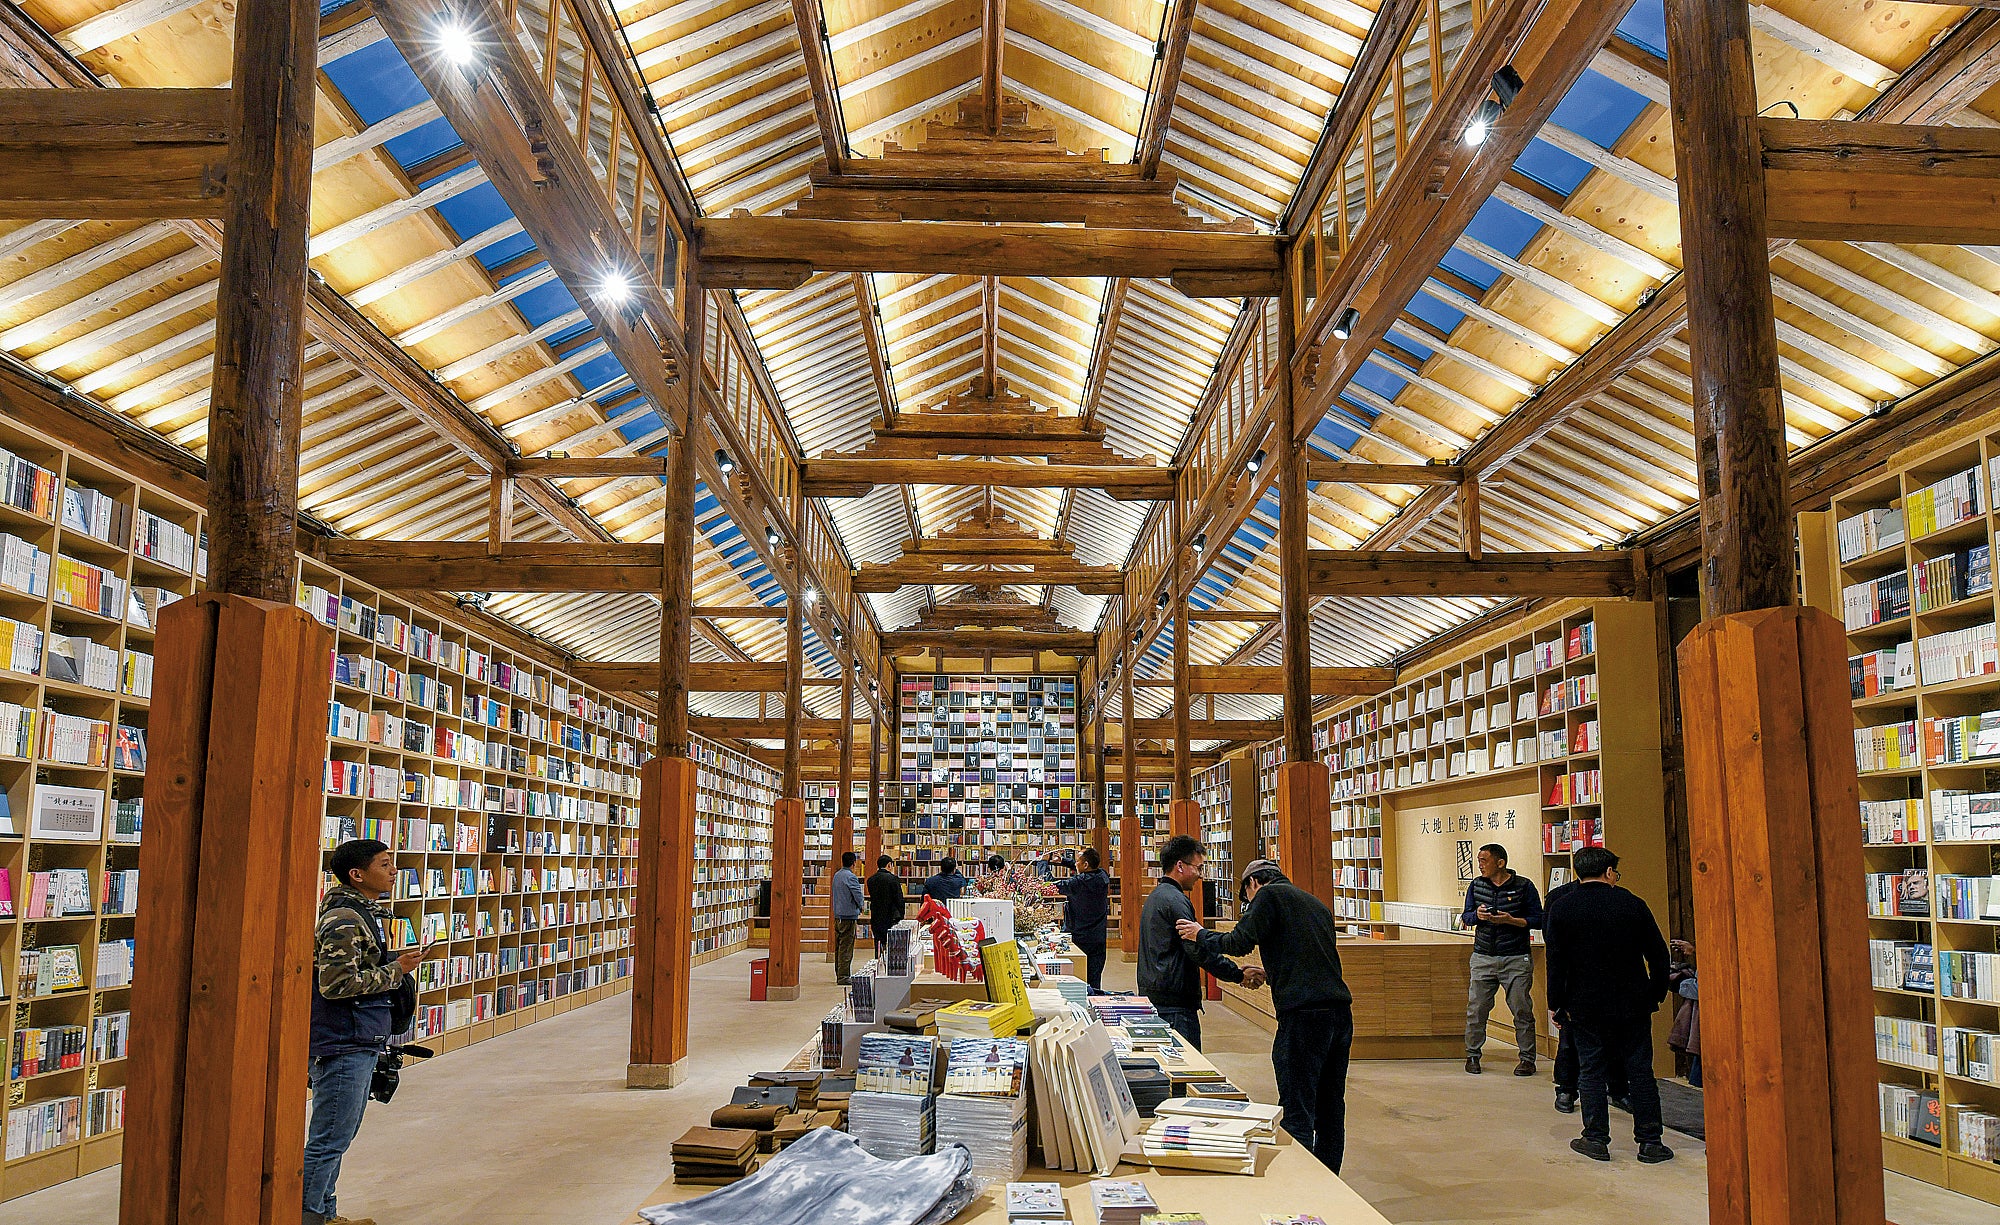 Shaxi Bai Ethnic Bookstore, a branch of Librairie Avant-Garde, in Jianchuan county, Yunnan province